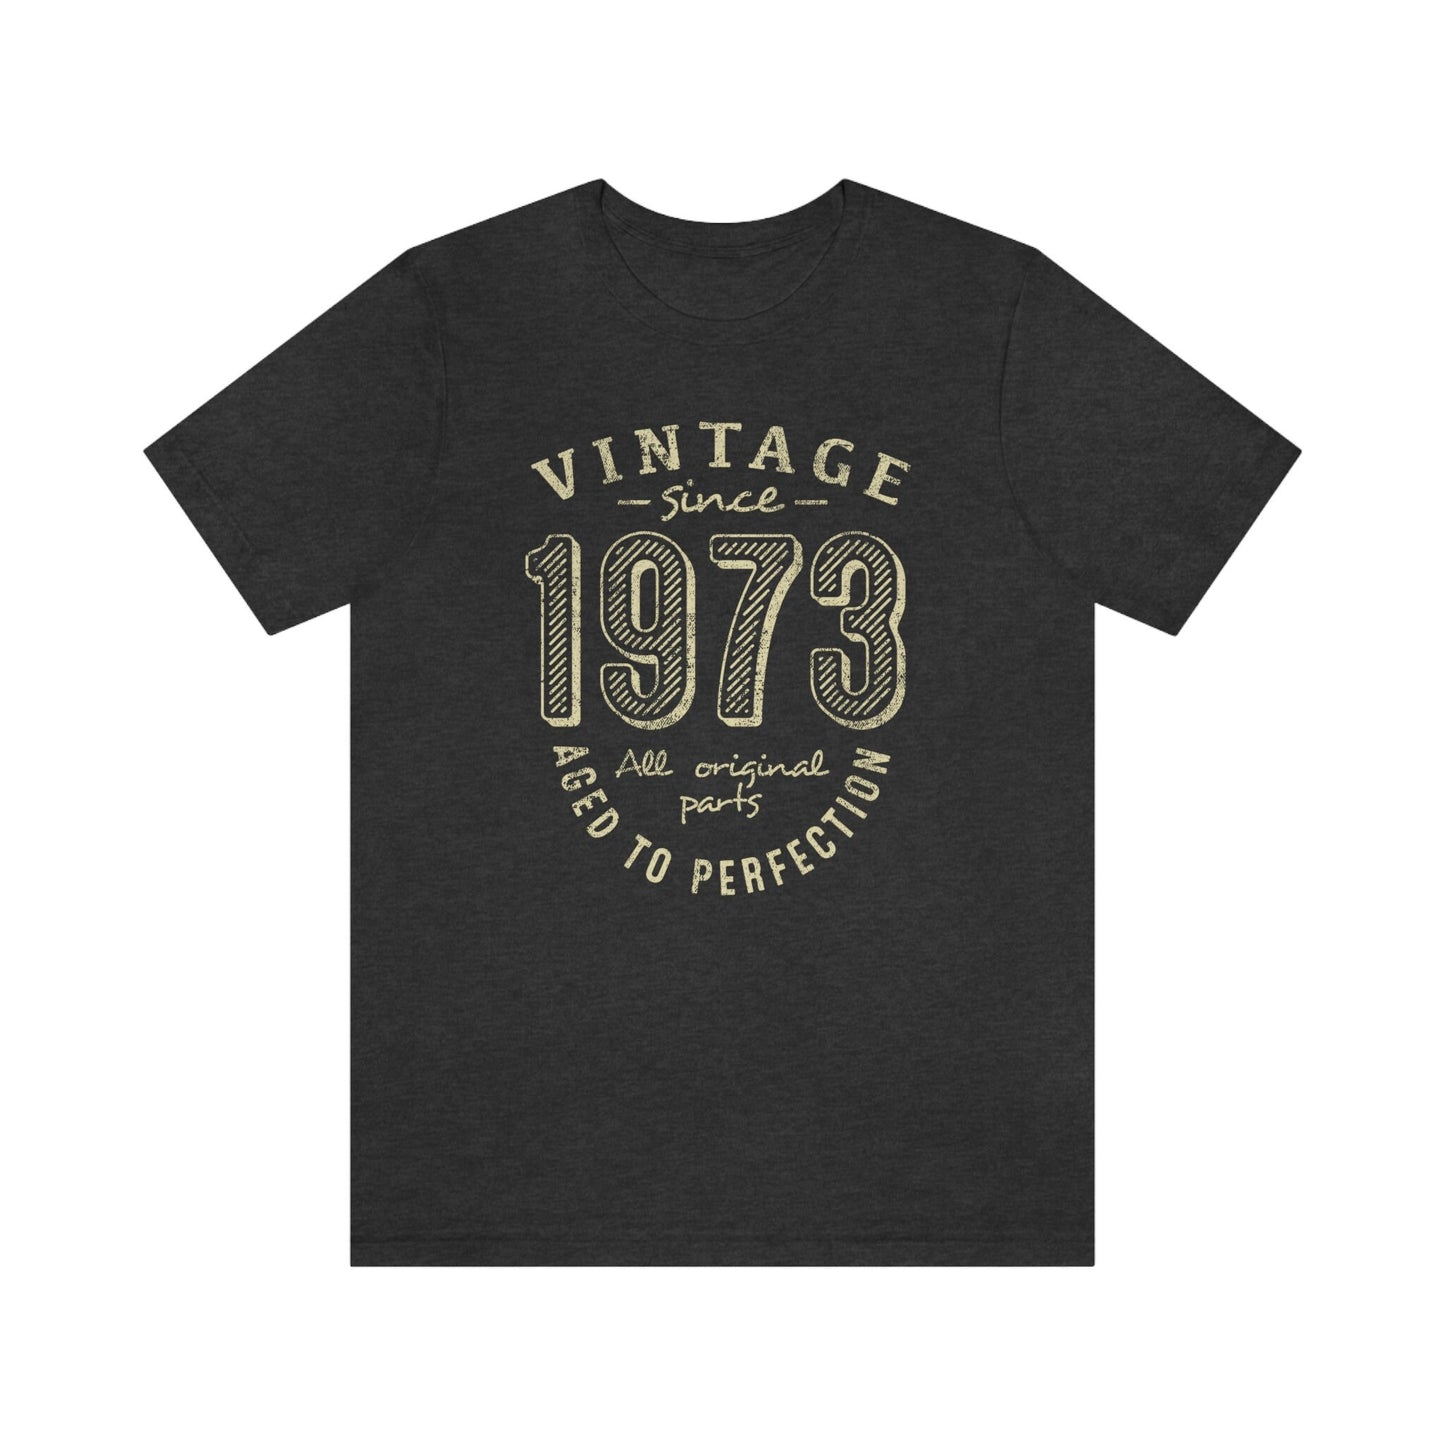 Vintage since 1973 Birthday Gift T-Shirt for Women or Men